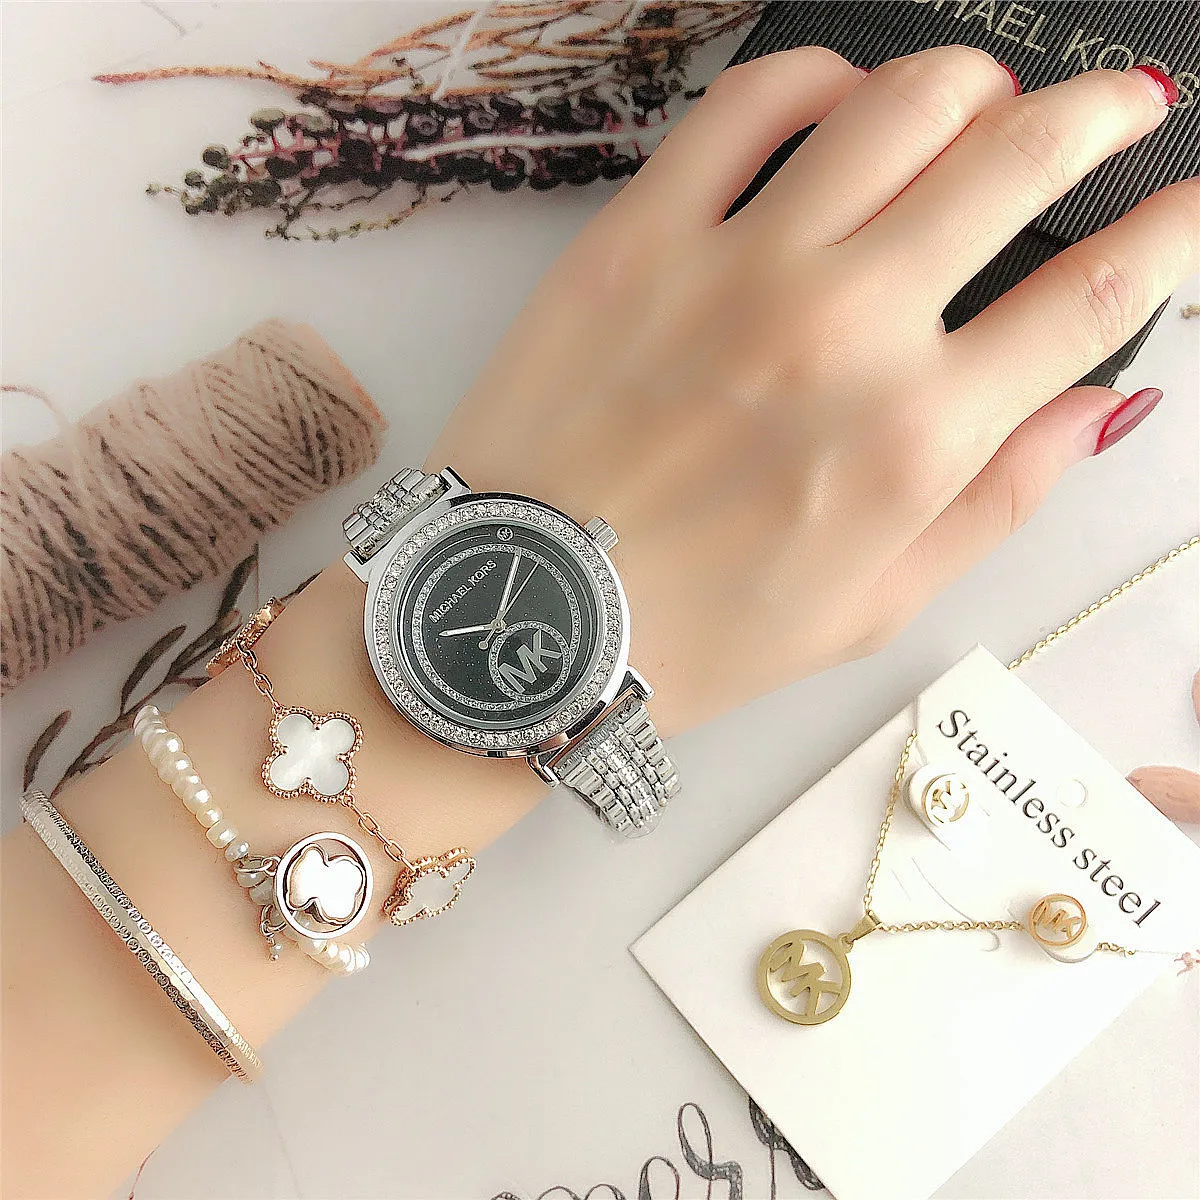 

MARCH PRO Wholesale Fashion Watch Set Gift Ladies Digital Quartz Watch MK reloj oem Smart Watch, 5 colors